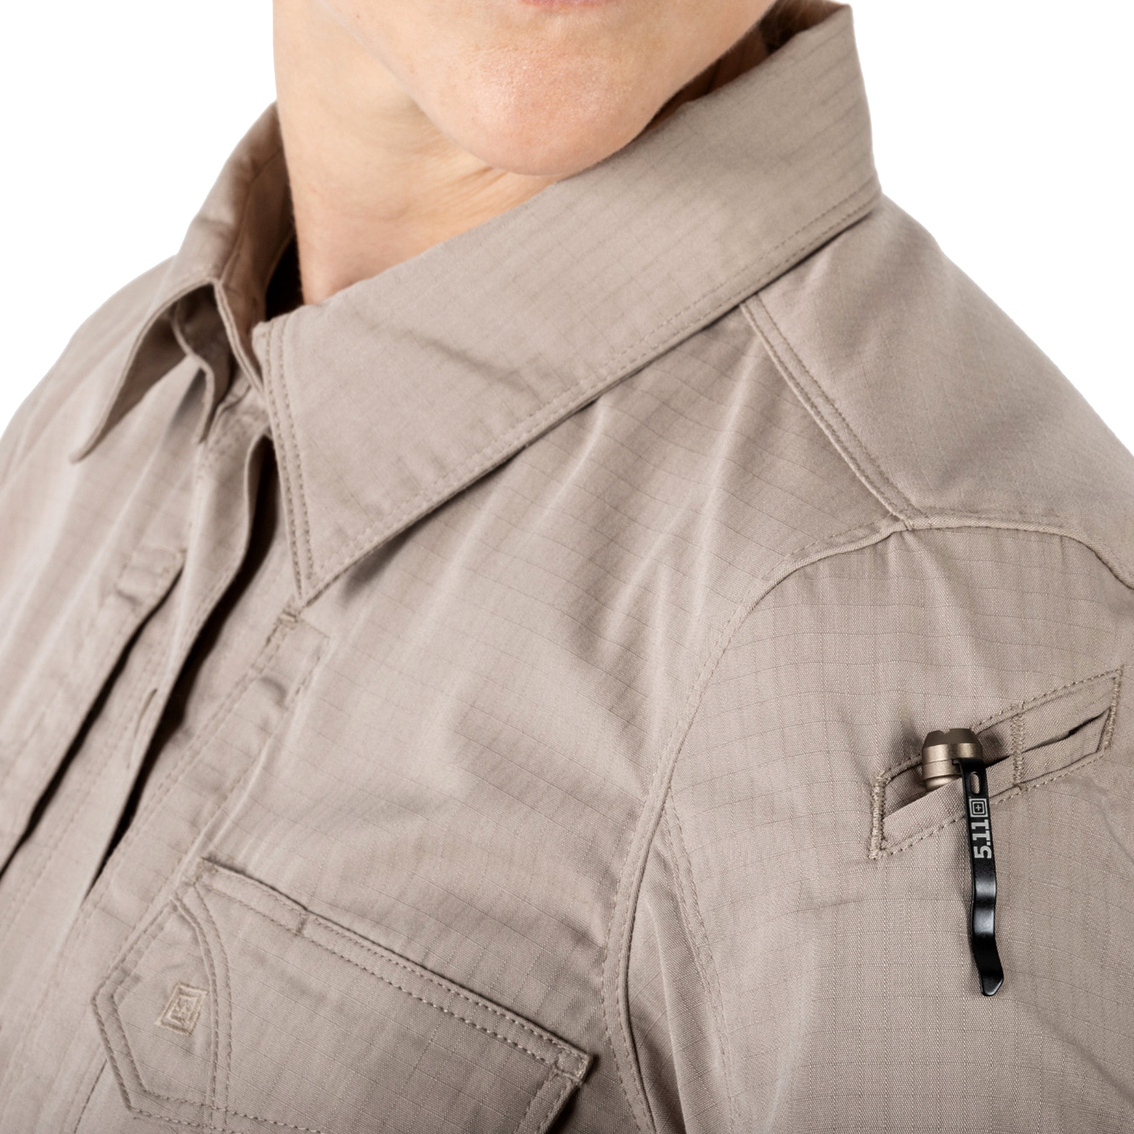 5.11 Women's Stryke Shirt - Image 6 of 8